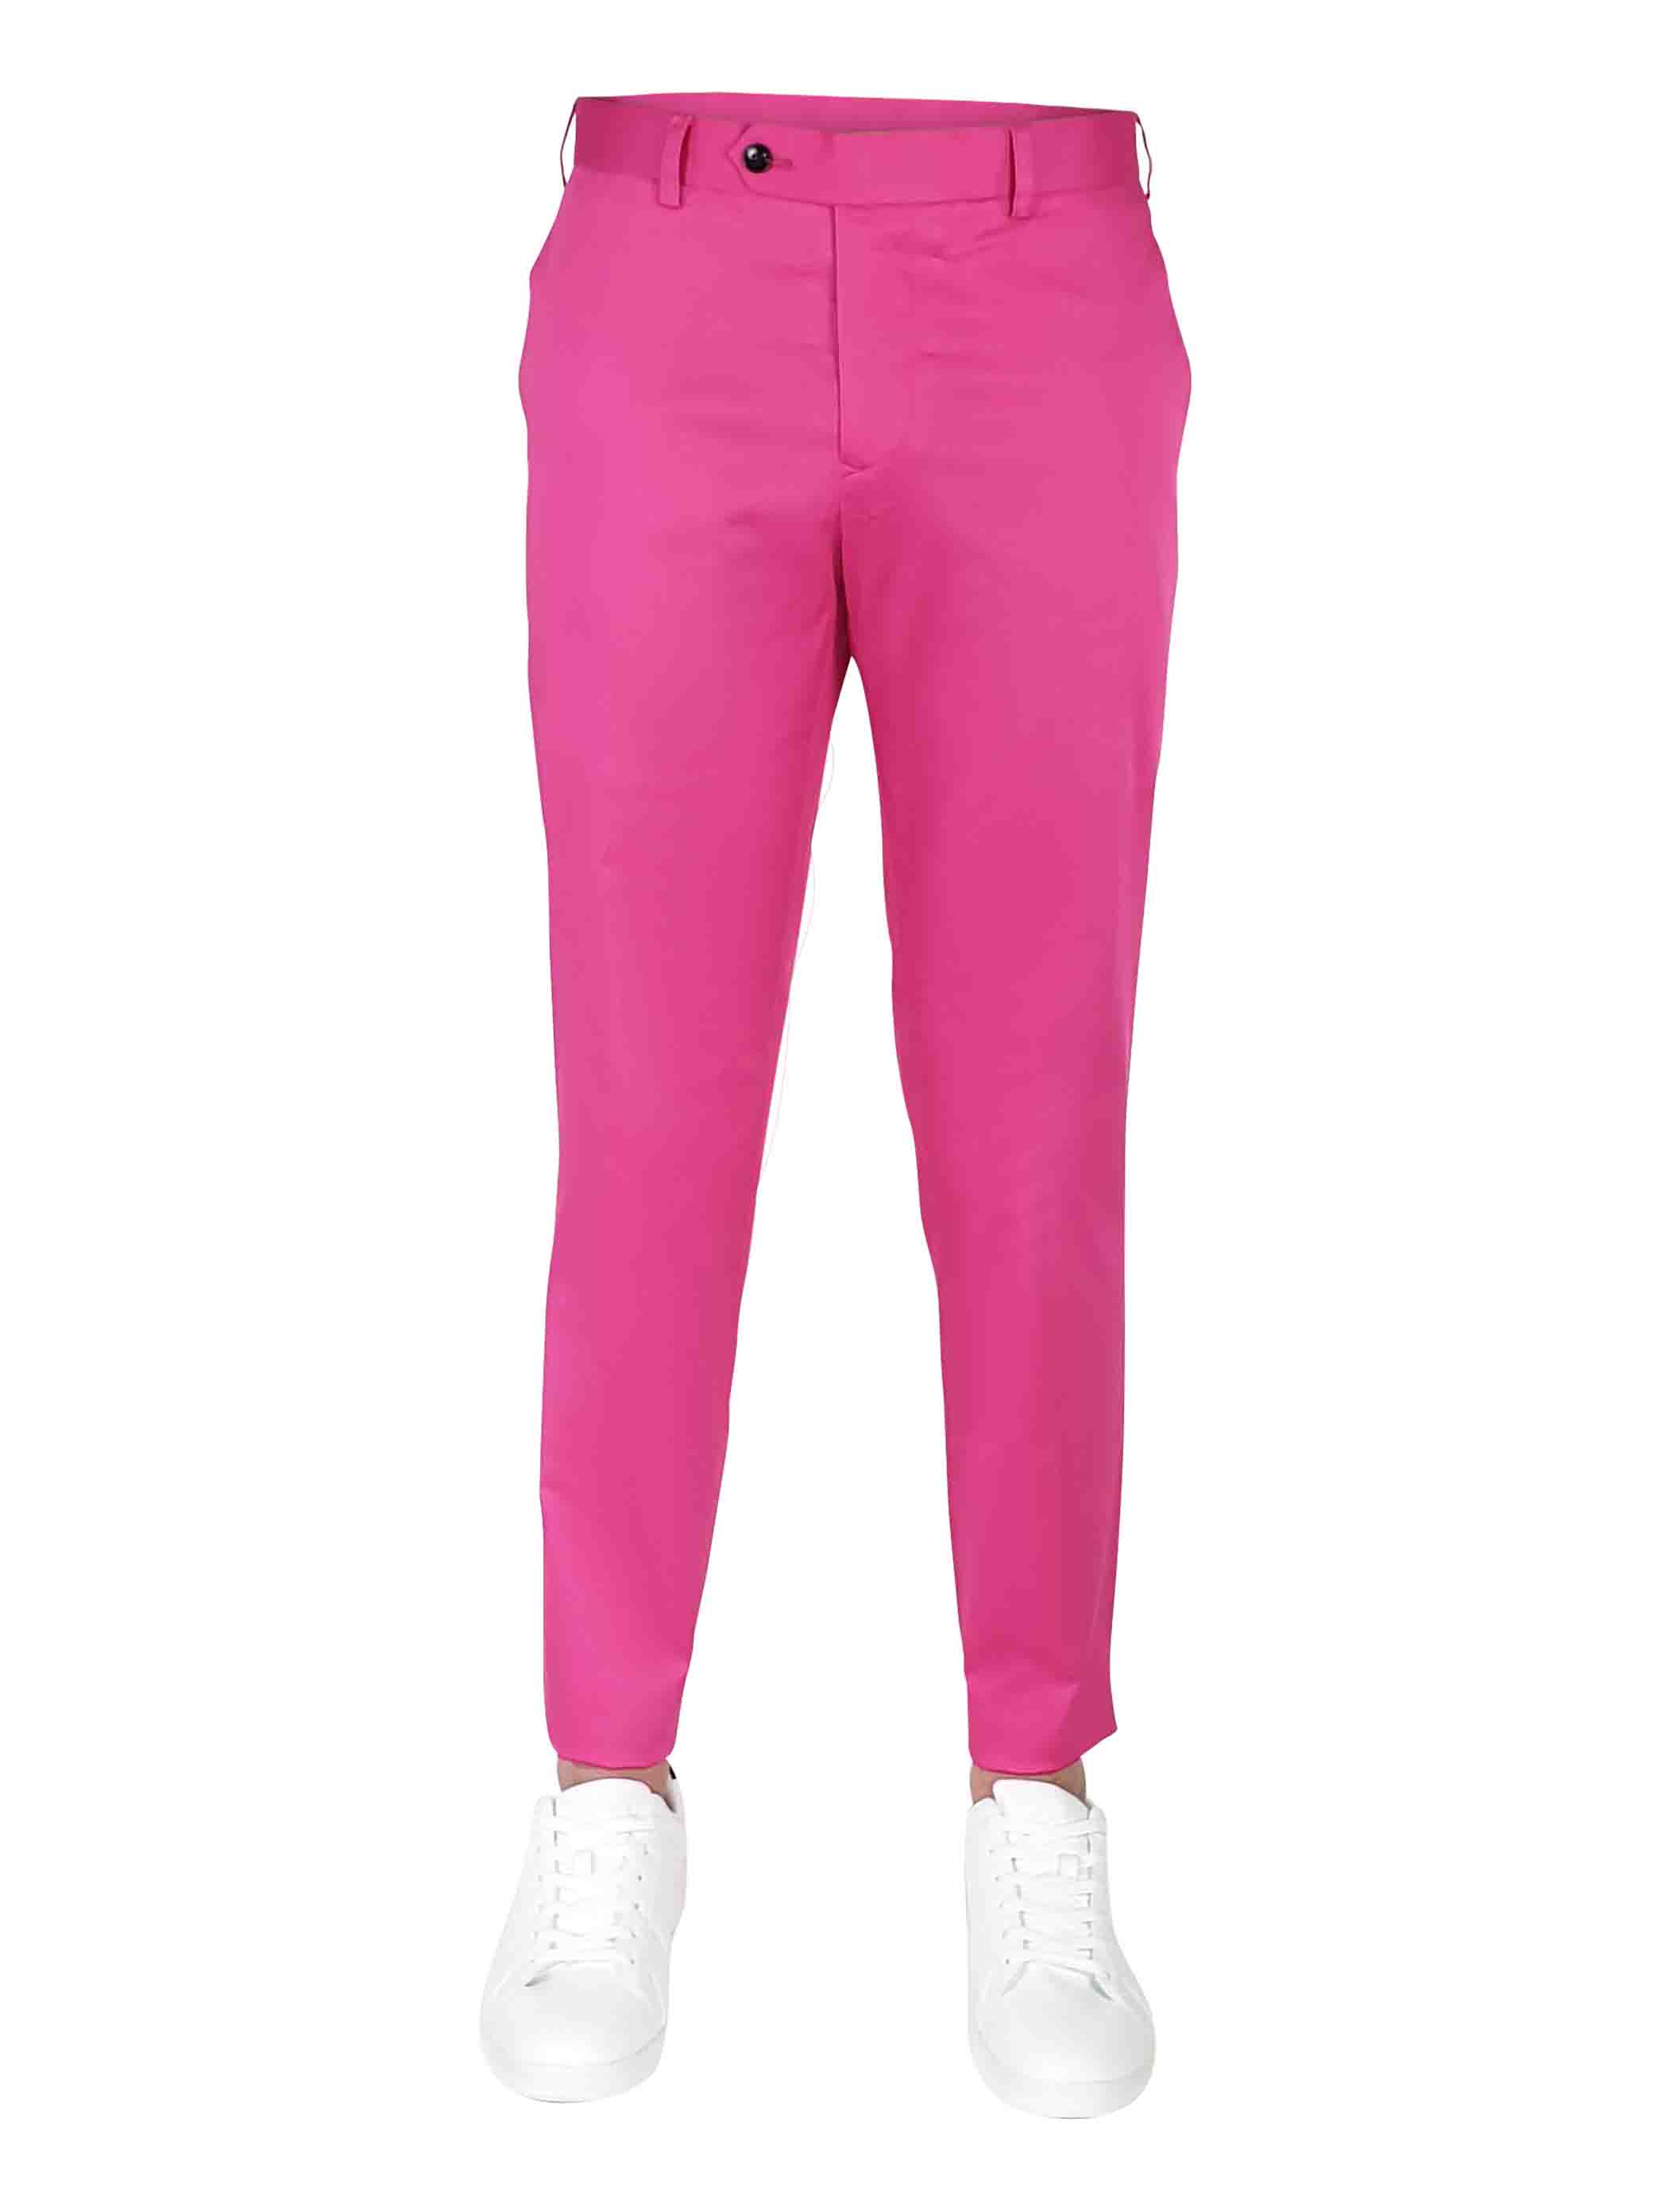 Men's Custom Chino - Pink - Uniform Edit